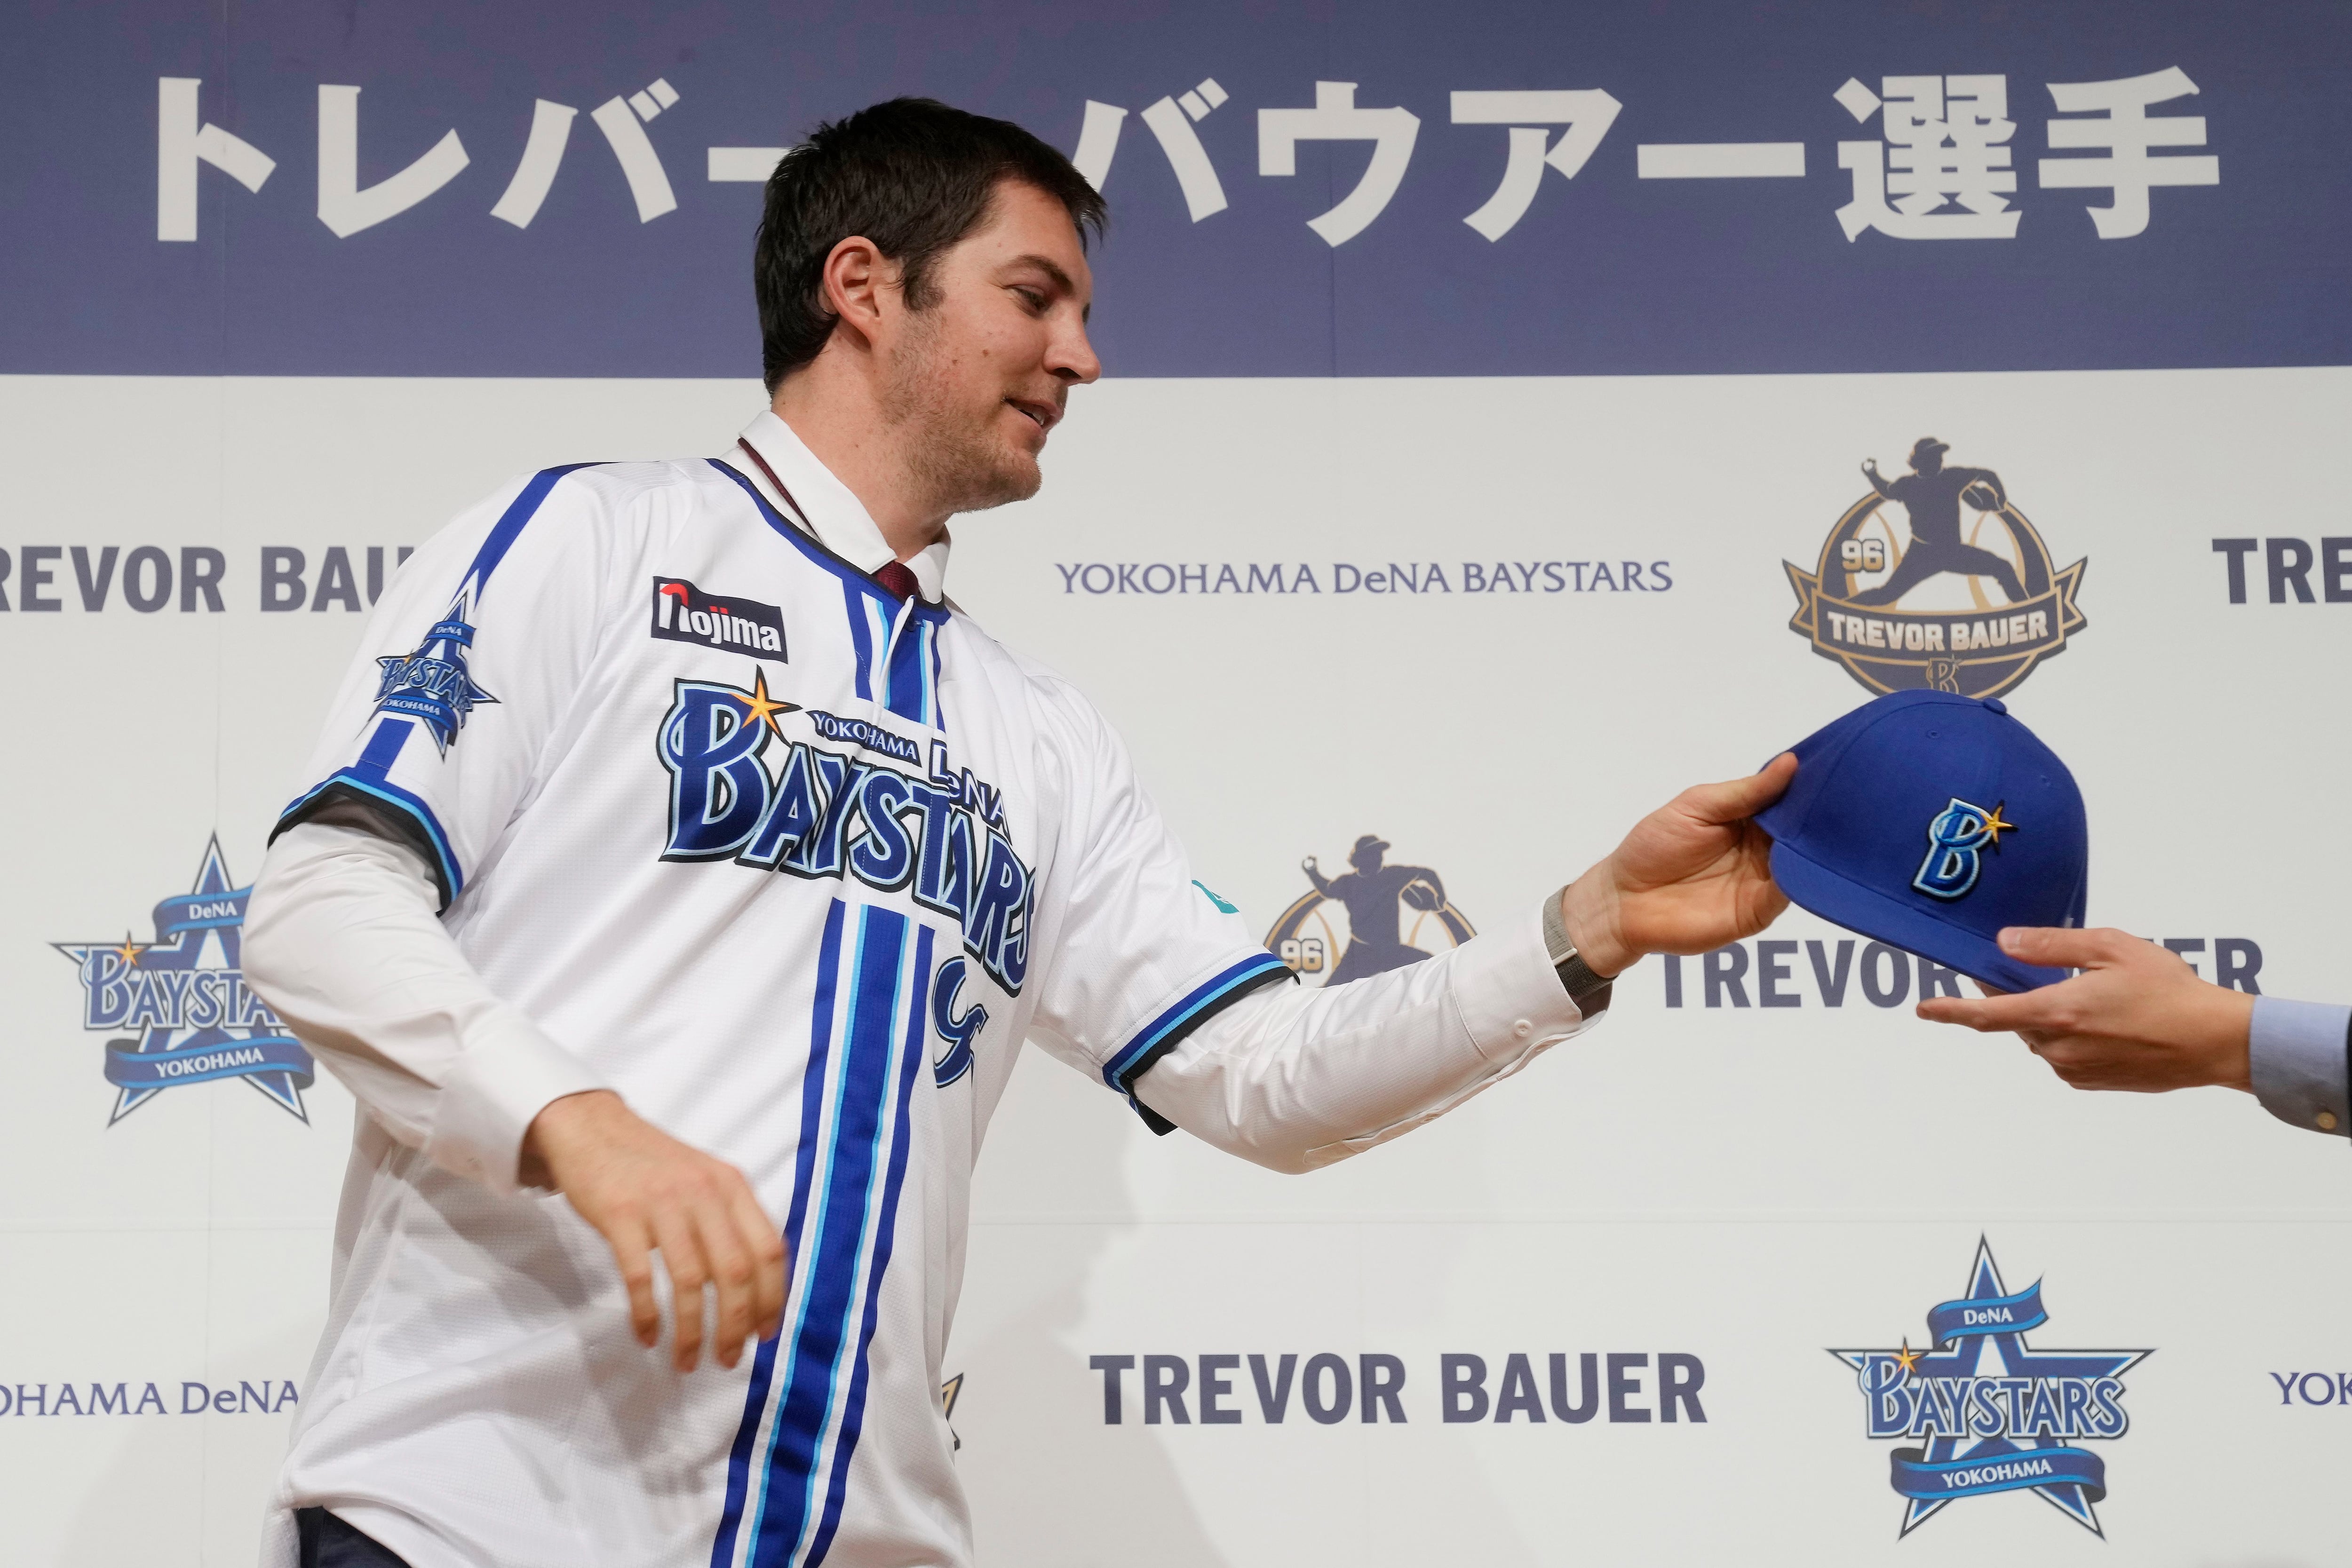 Trevor Bauer Signing One-Year Contract With Japan's Yokohama DeNA BayStars